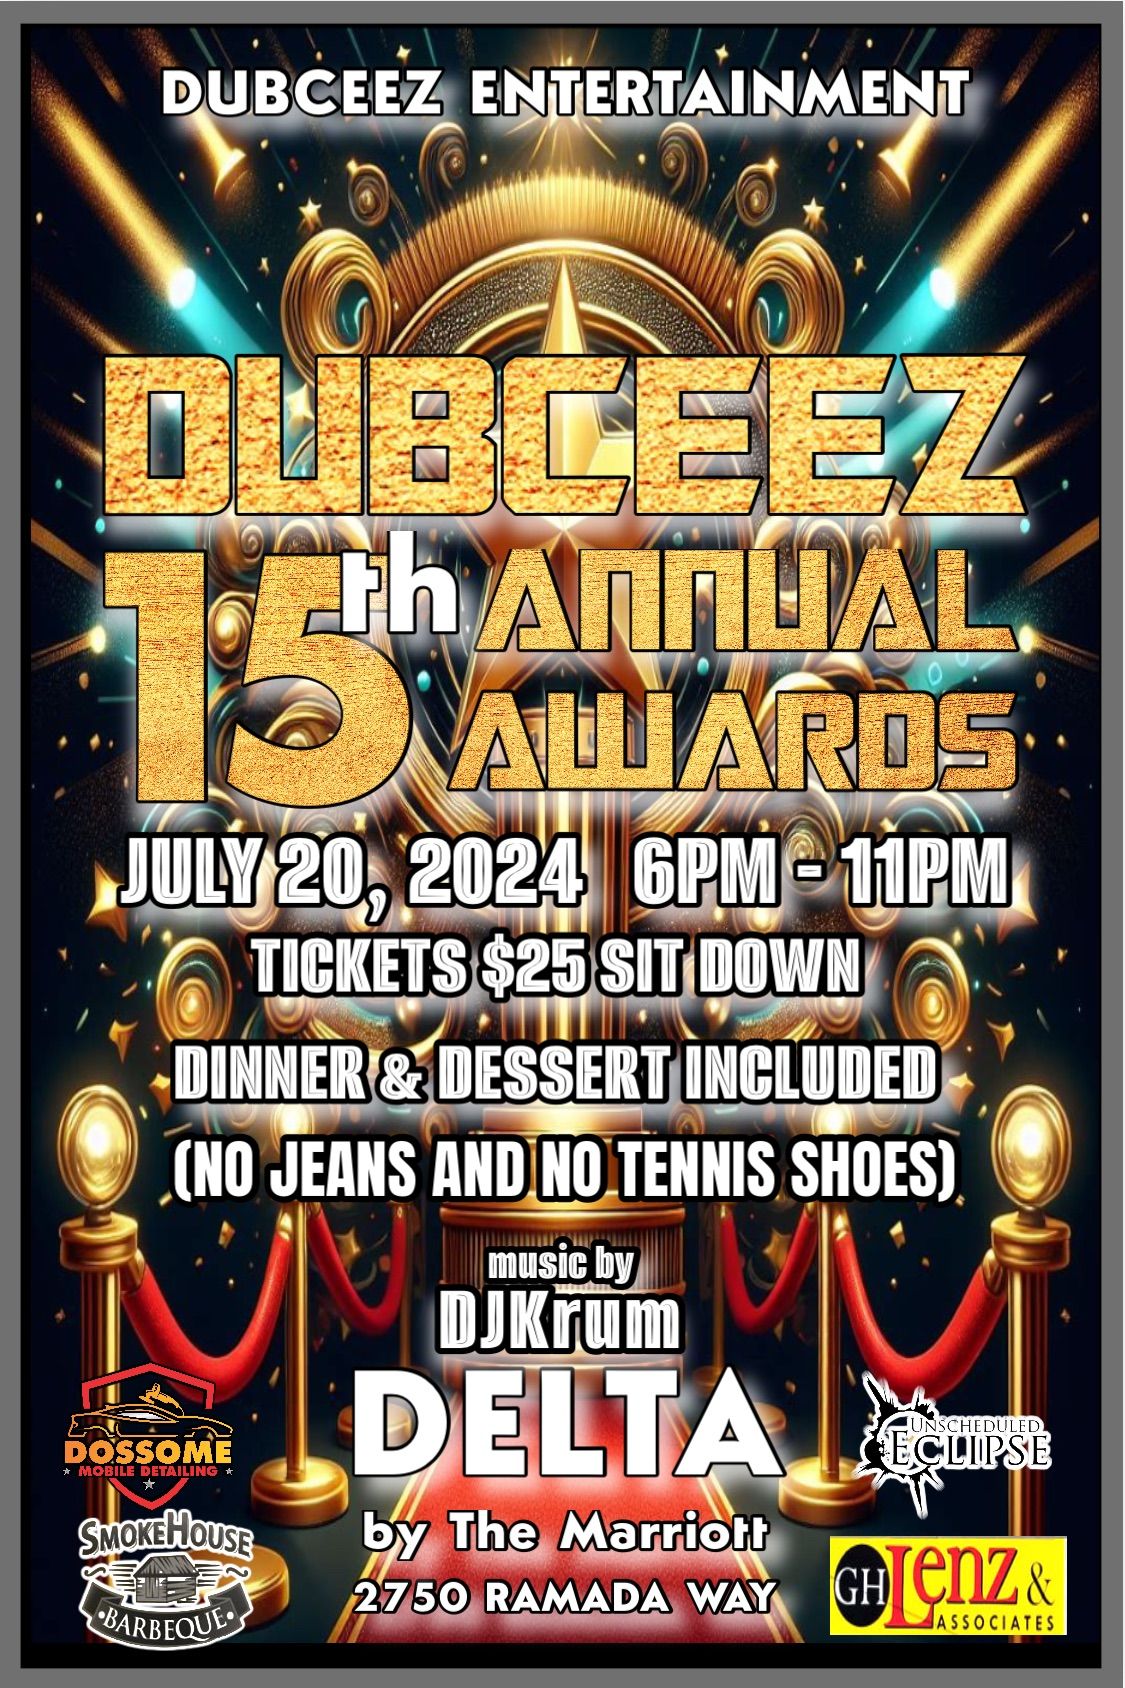 Dubceez 15th Annual Awards 